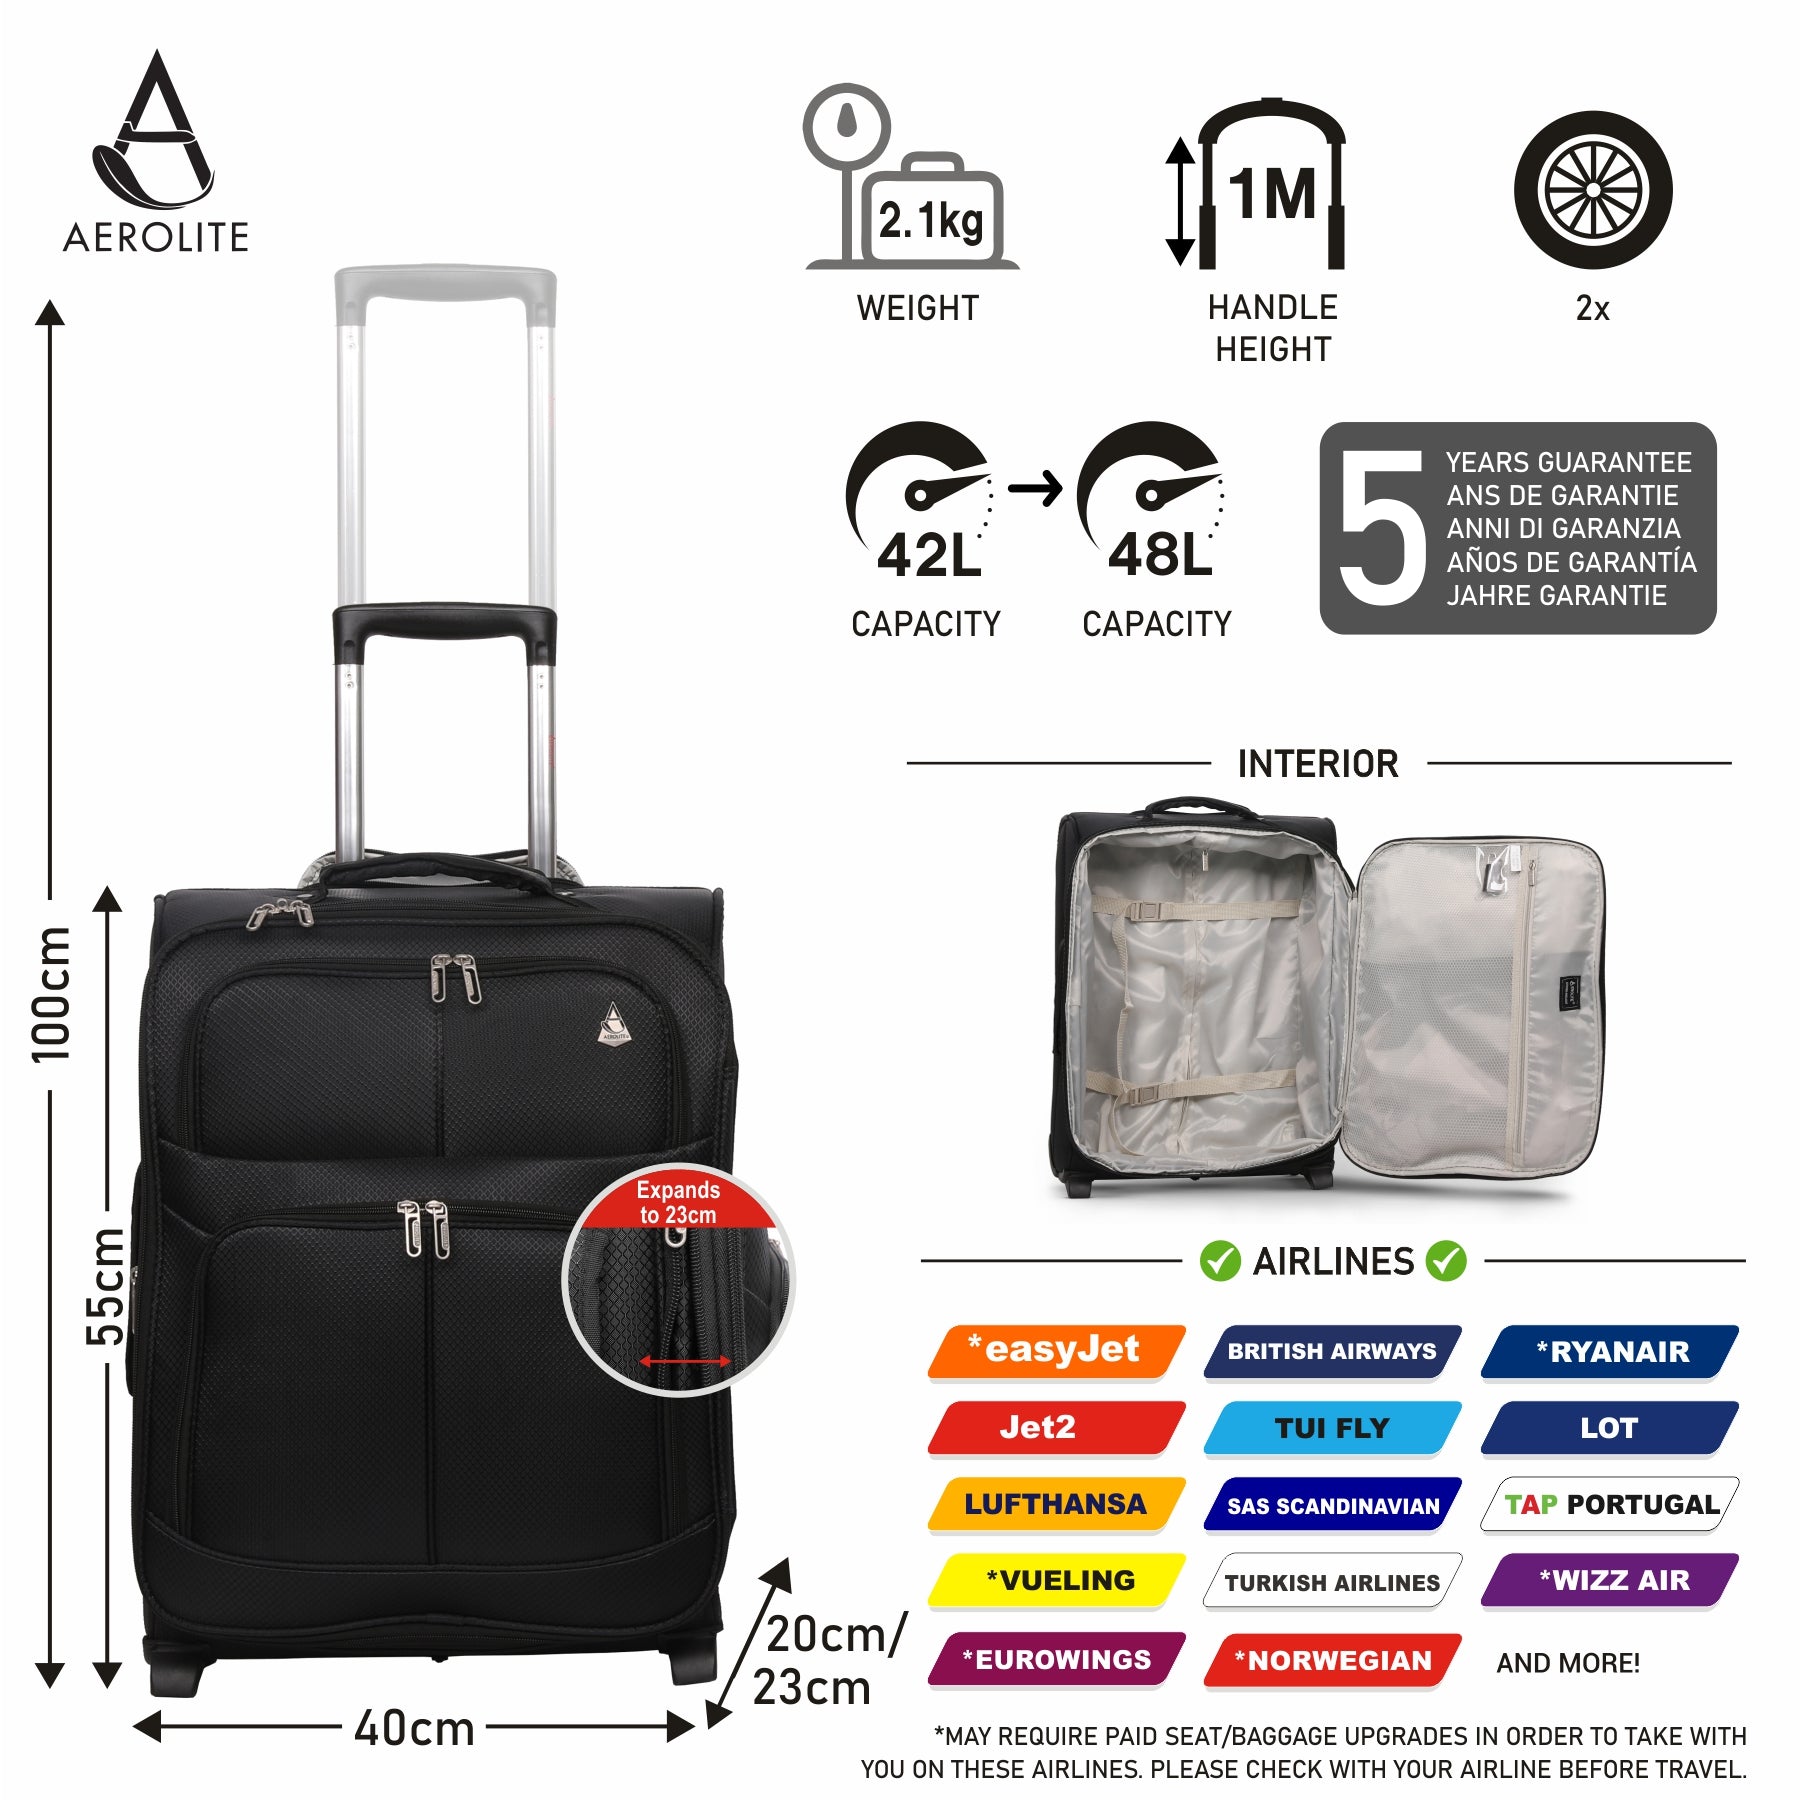 Aerolite (55x40x20cm) Lightweight Cabin Hand Luggage with 50kg Luggage Scales | 2 Wheels